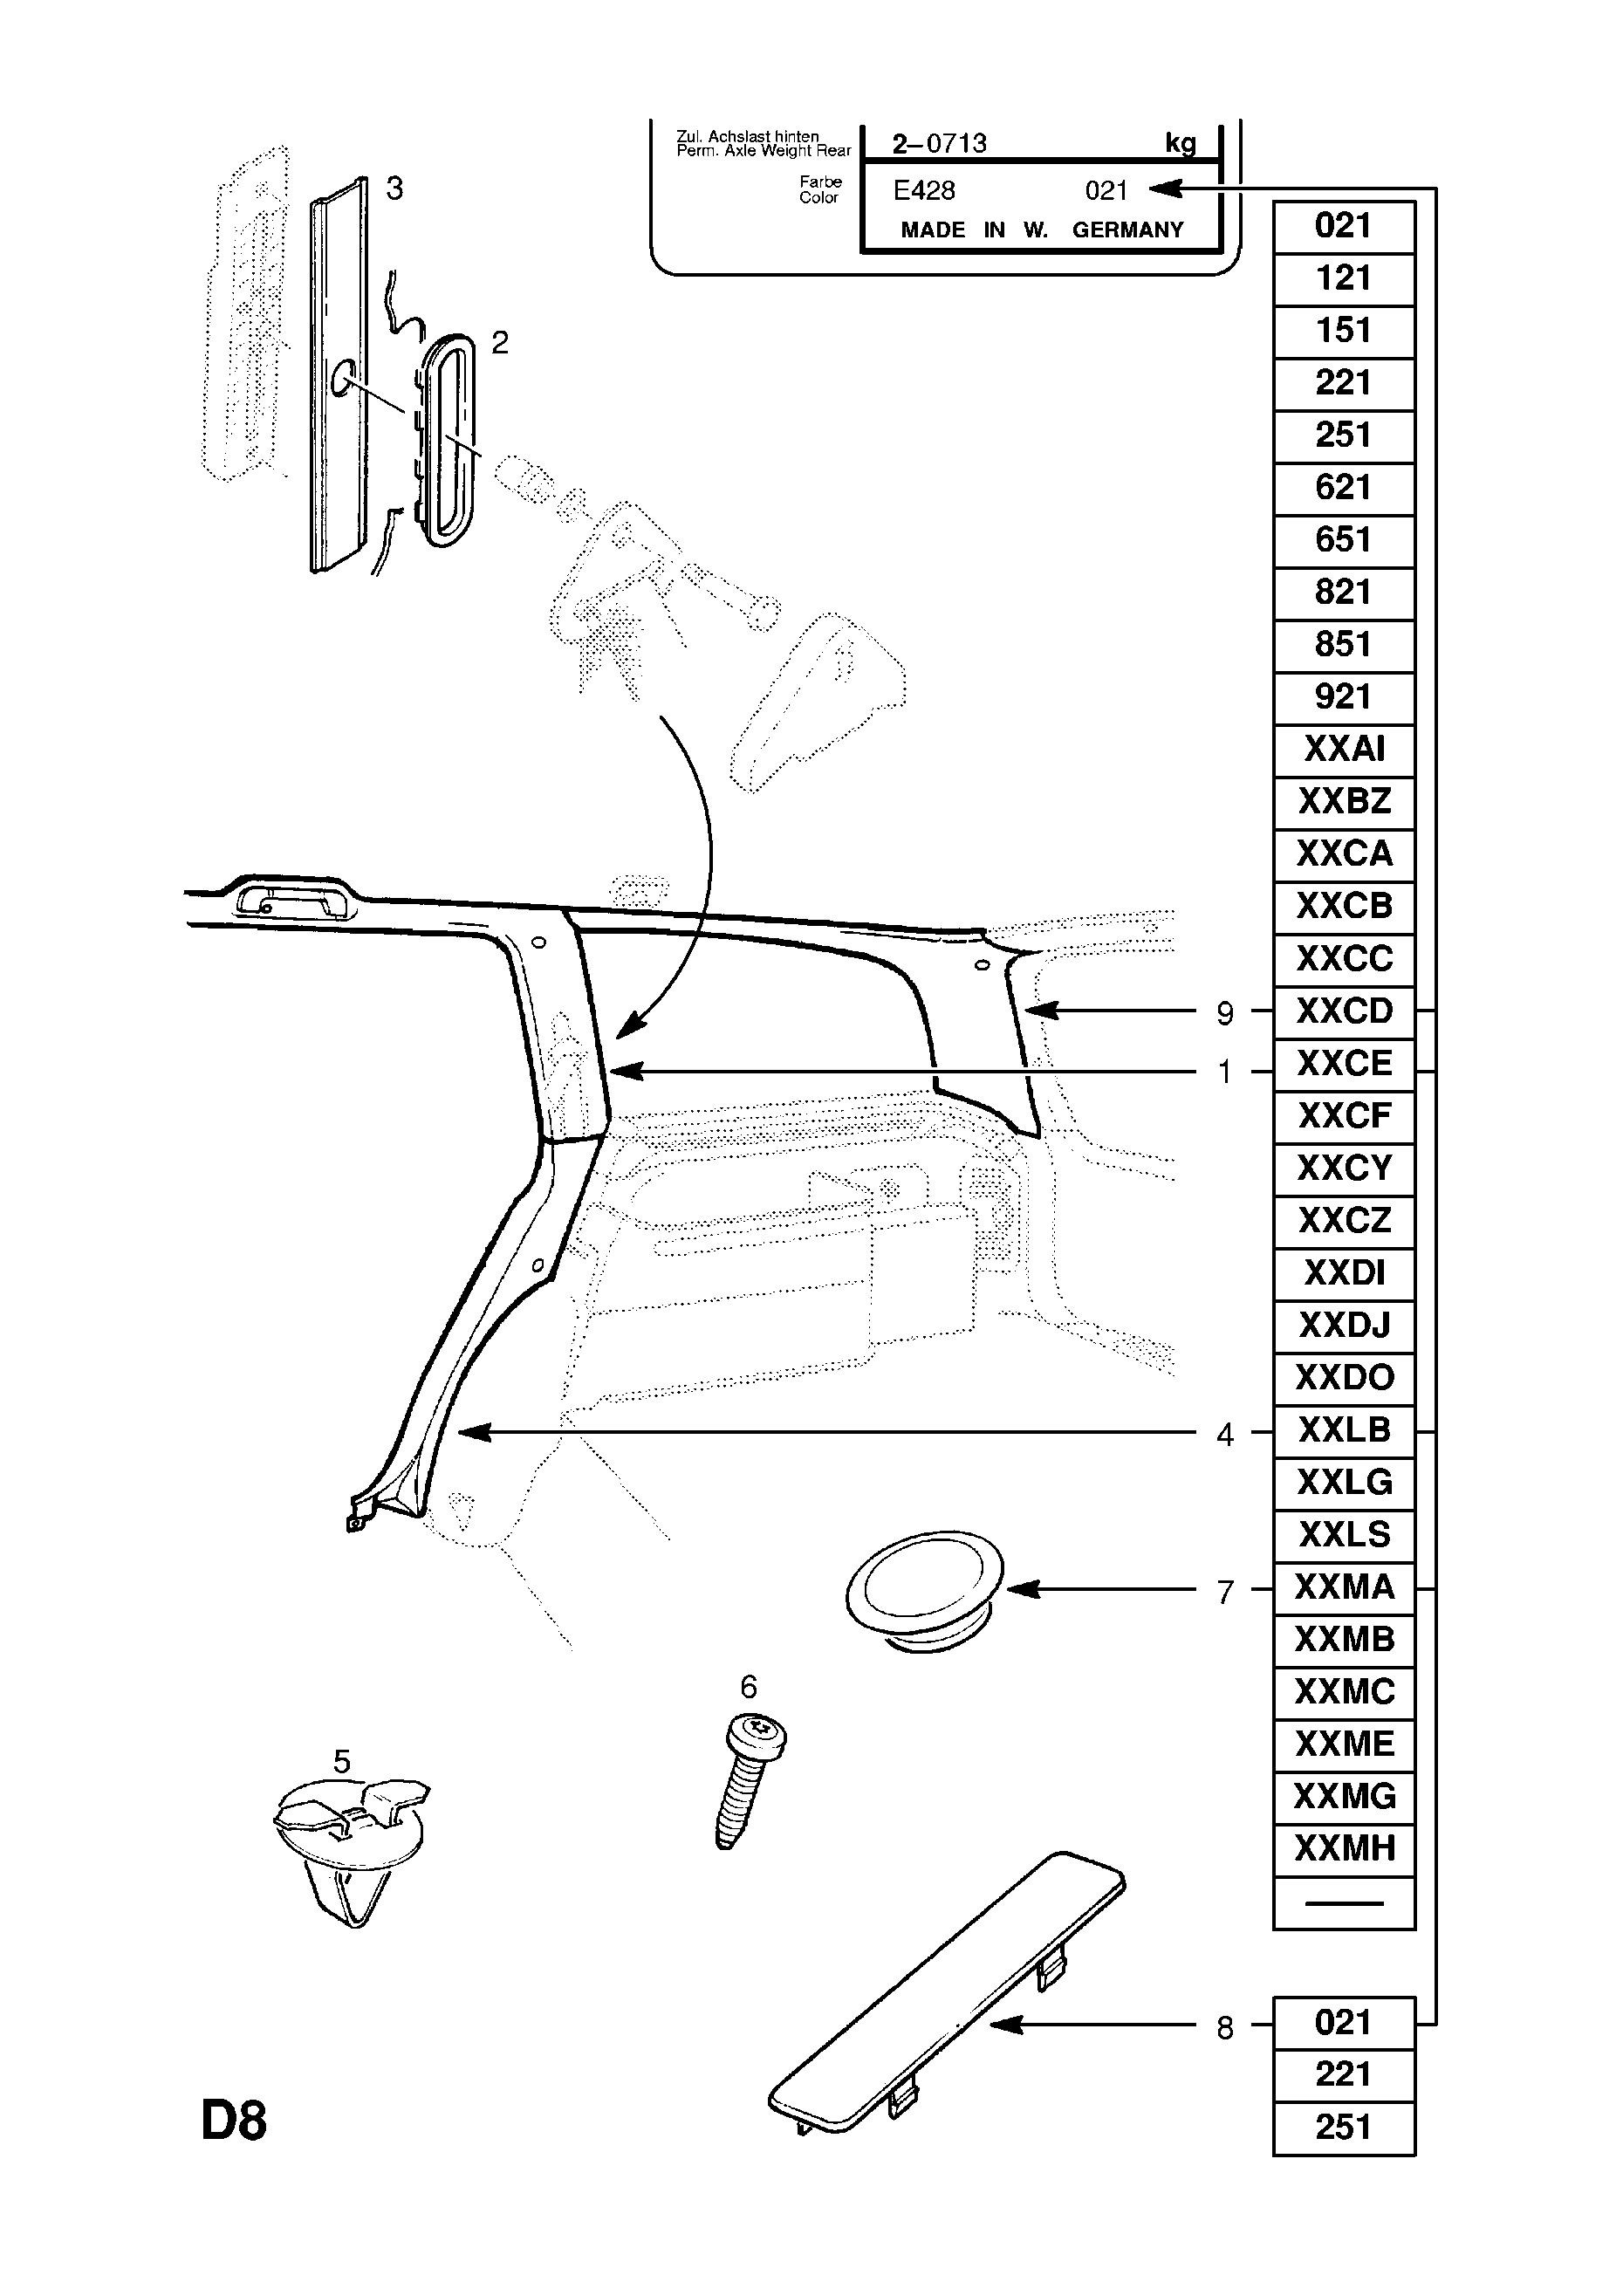 VERKLEIDUNG C-SAEULE (FORTSETZUNG) <small><i>[CARAVAN (21,22,23,F35,M35,P35)]</i></small>